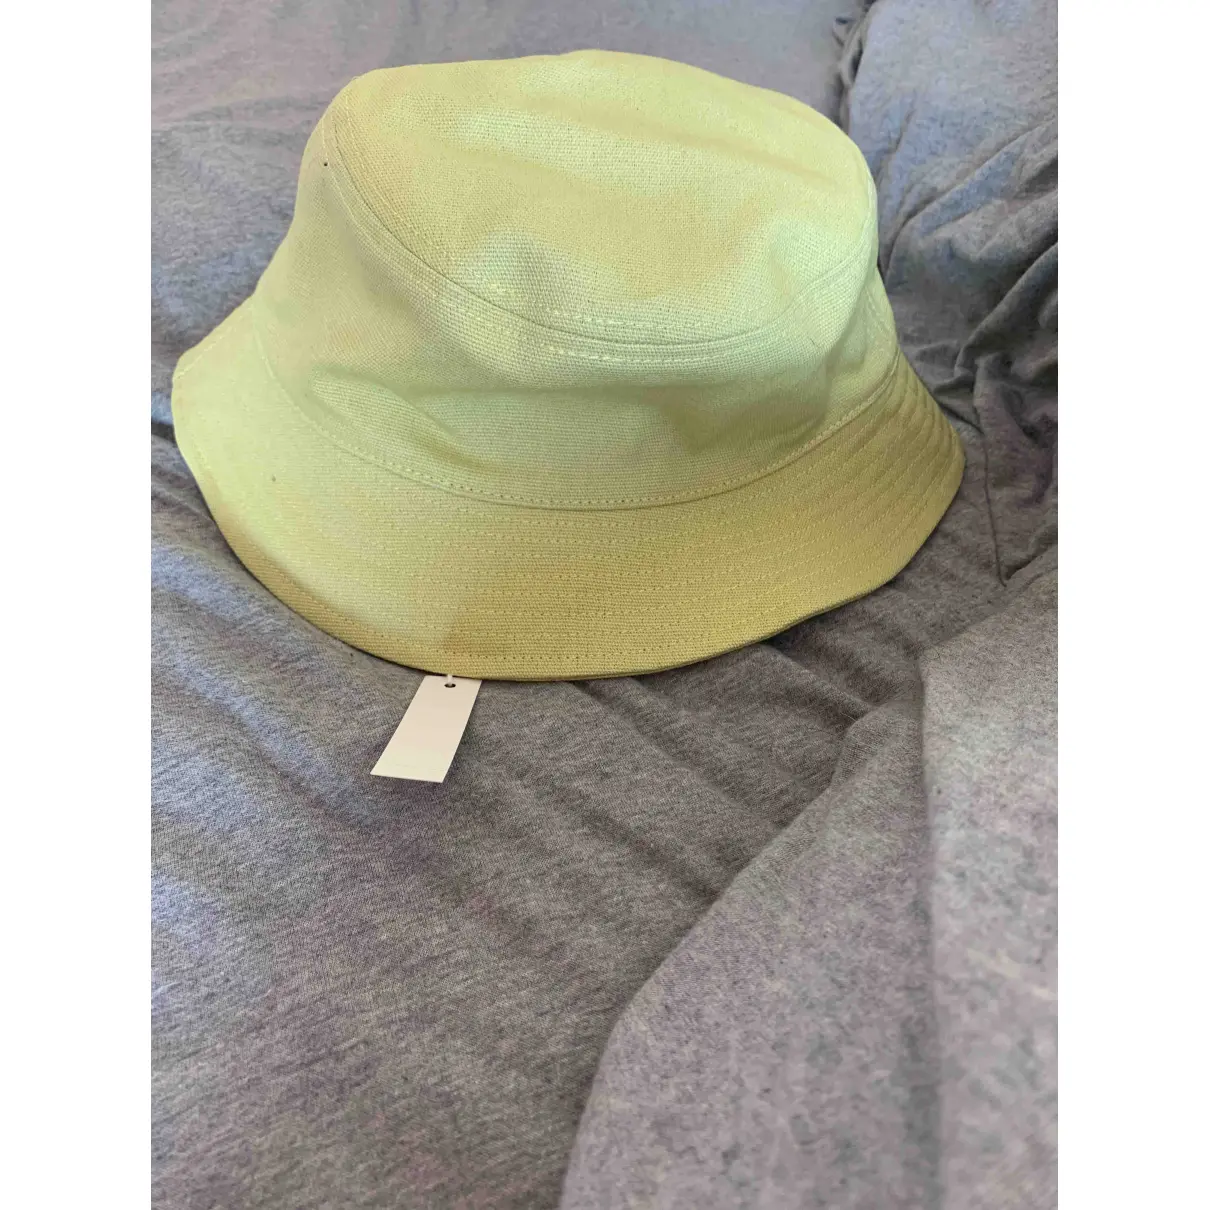 Buy Madewell Hat online